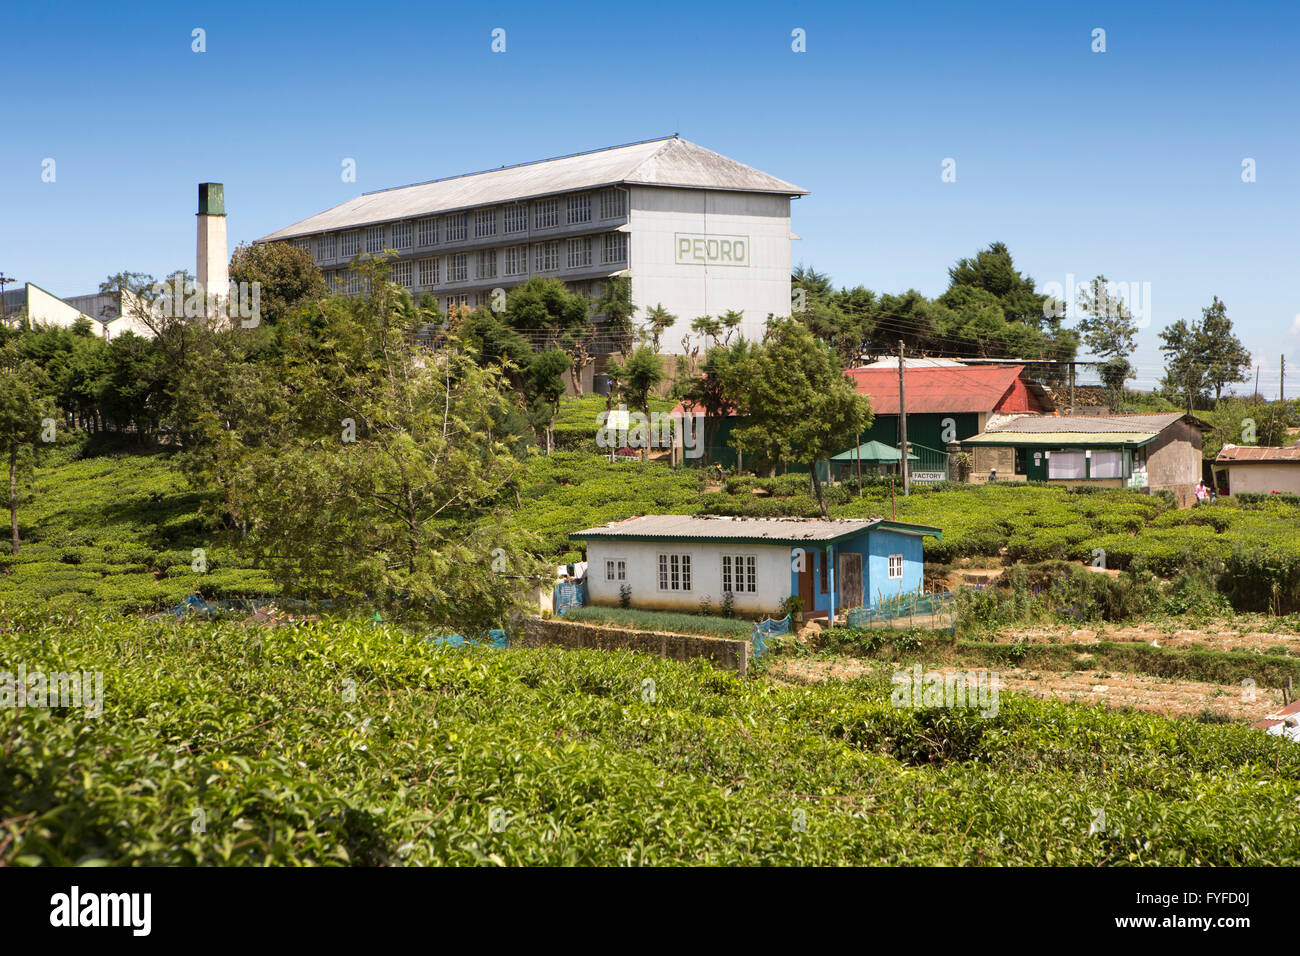 Sri Lanka, Nuwara Eliya, Pedro Tea Estate and factory Stock Photo